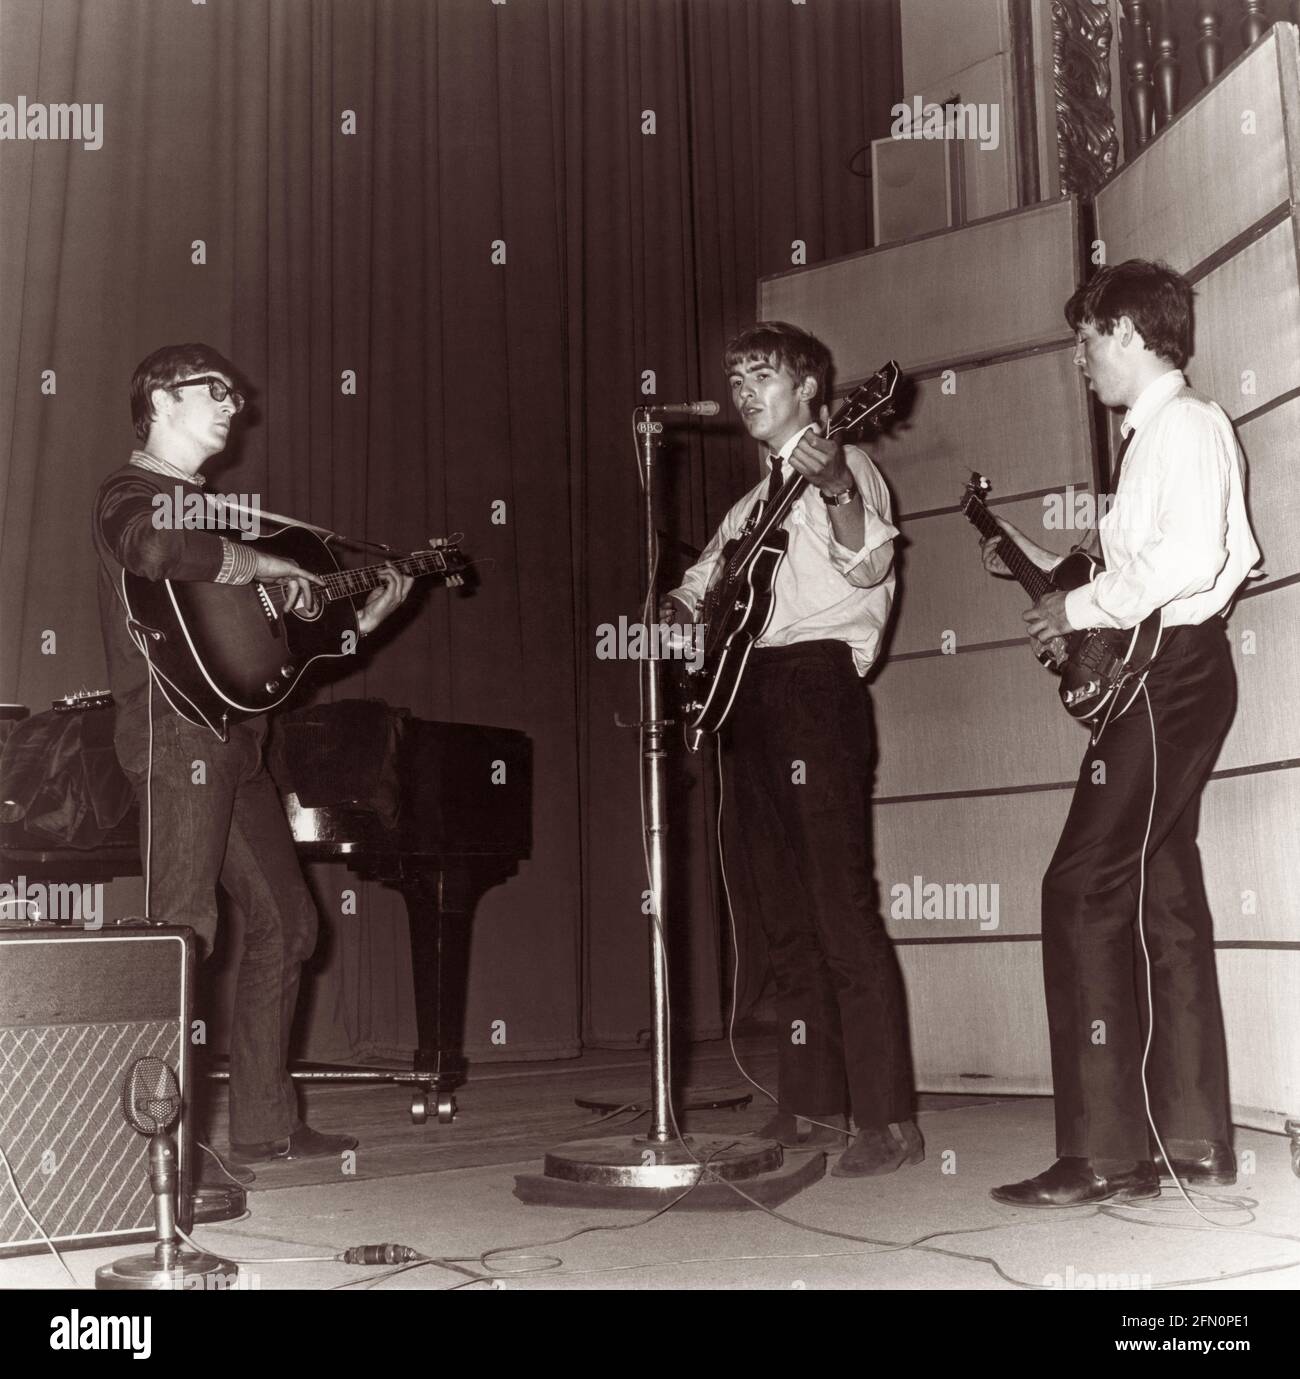 The Beatles performing live at the BBC Radio Studios, c1962. Stock Photo